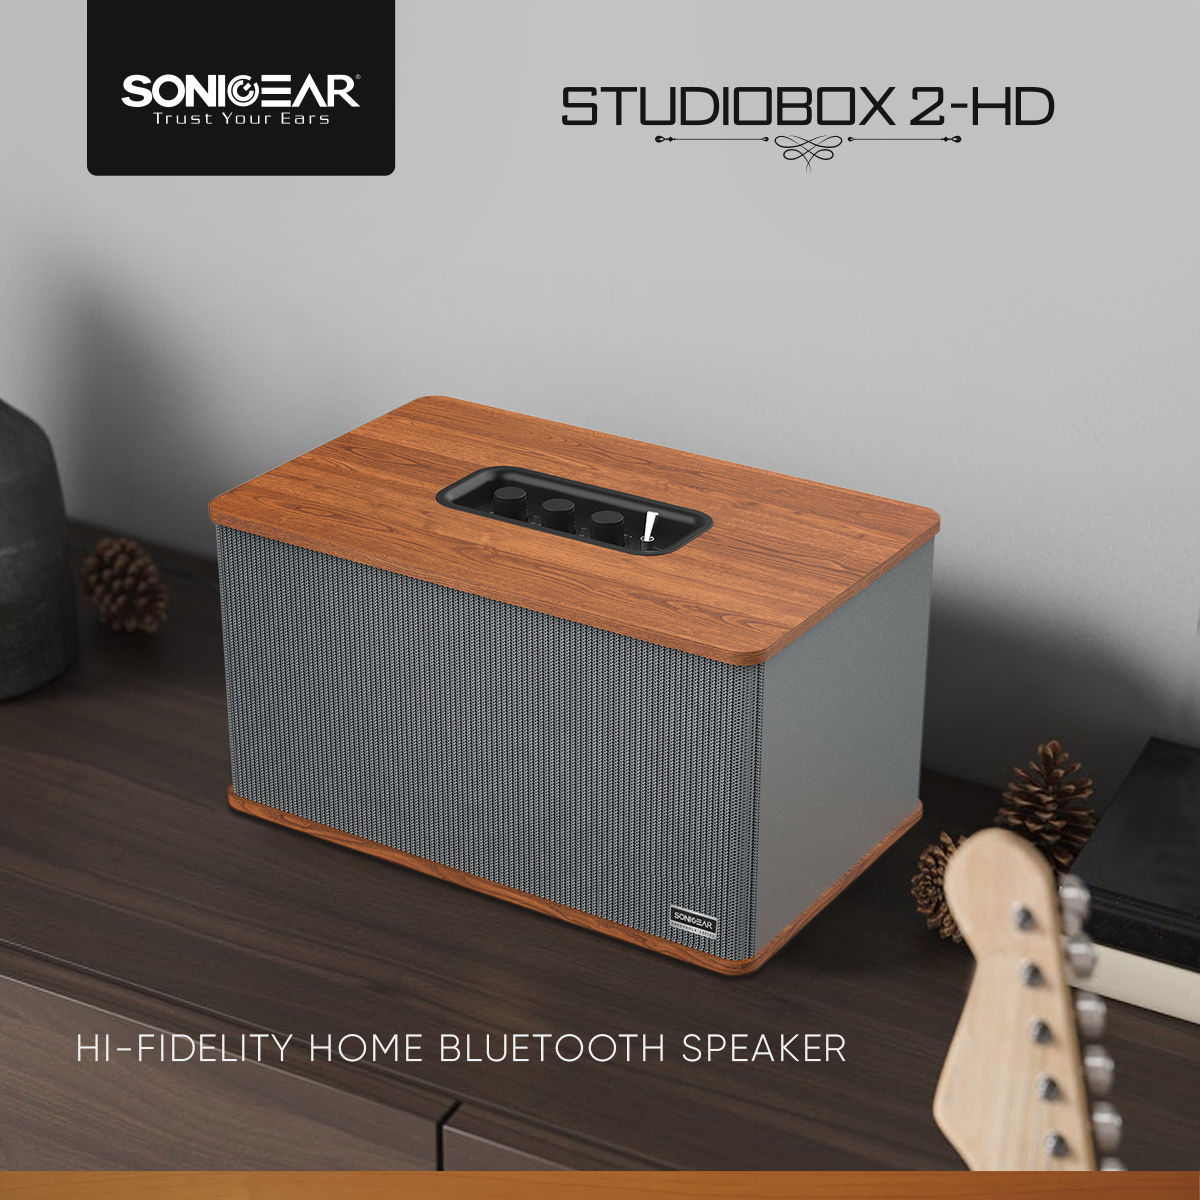 SonicGear StudioBox 2-HD